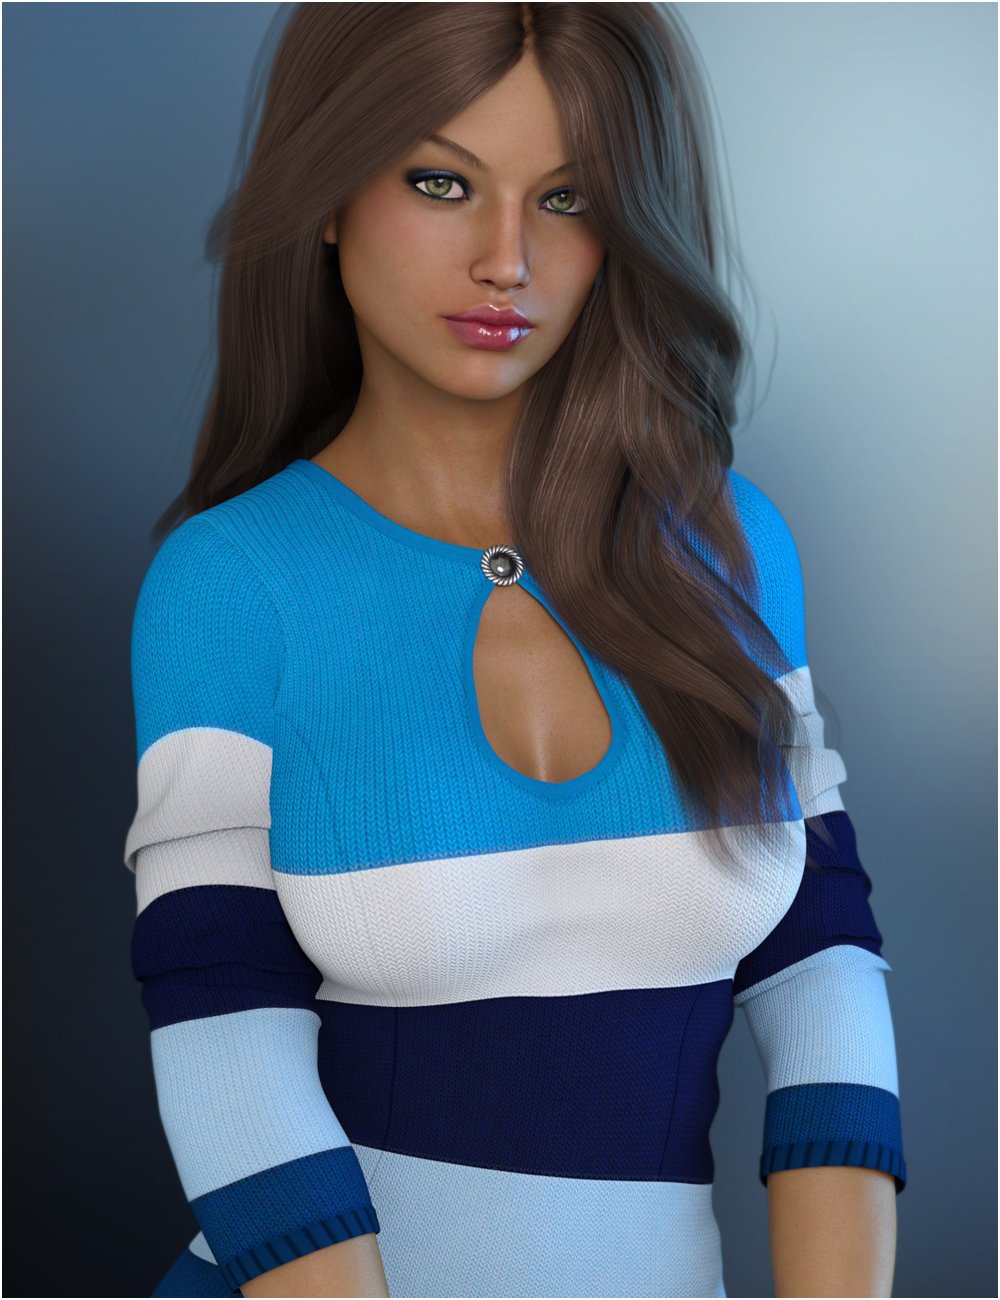 FWSA Paloma HD for Victoria 7 by: Fred Winkler ArtSabby, 3D Models by Daz 3D